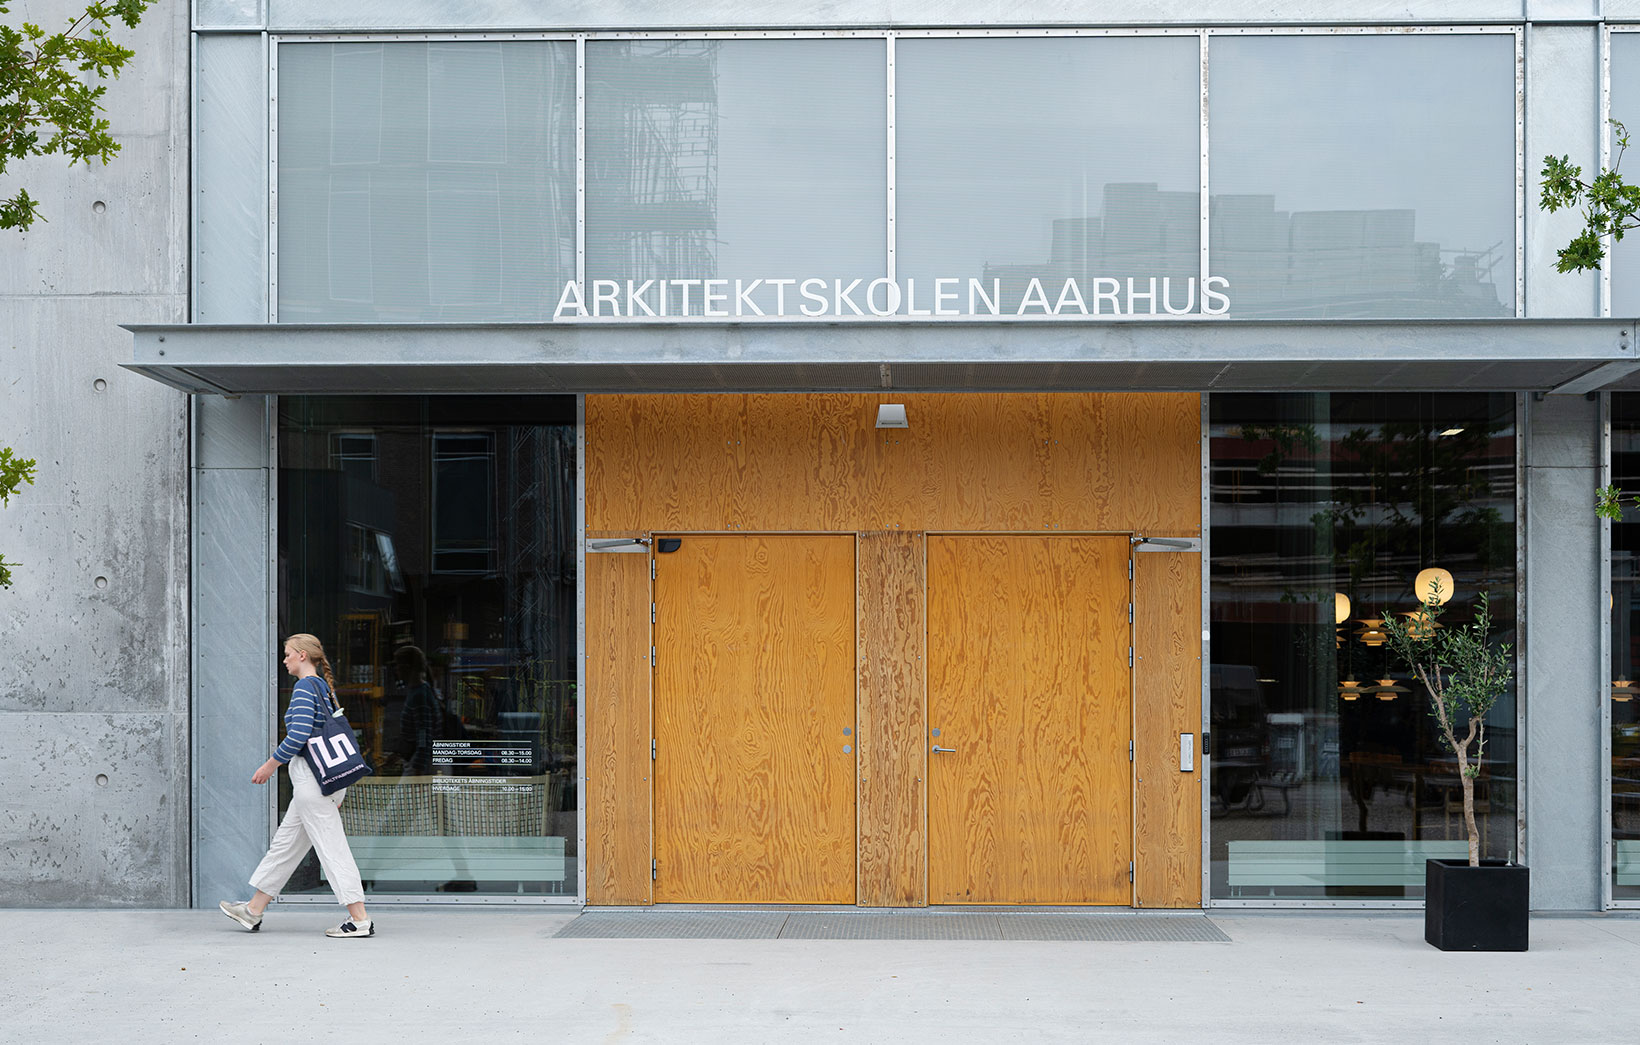 Arkitektskolen Aarhus